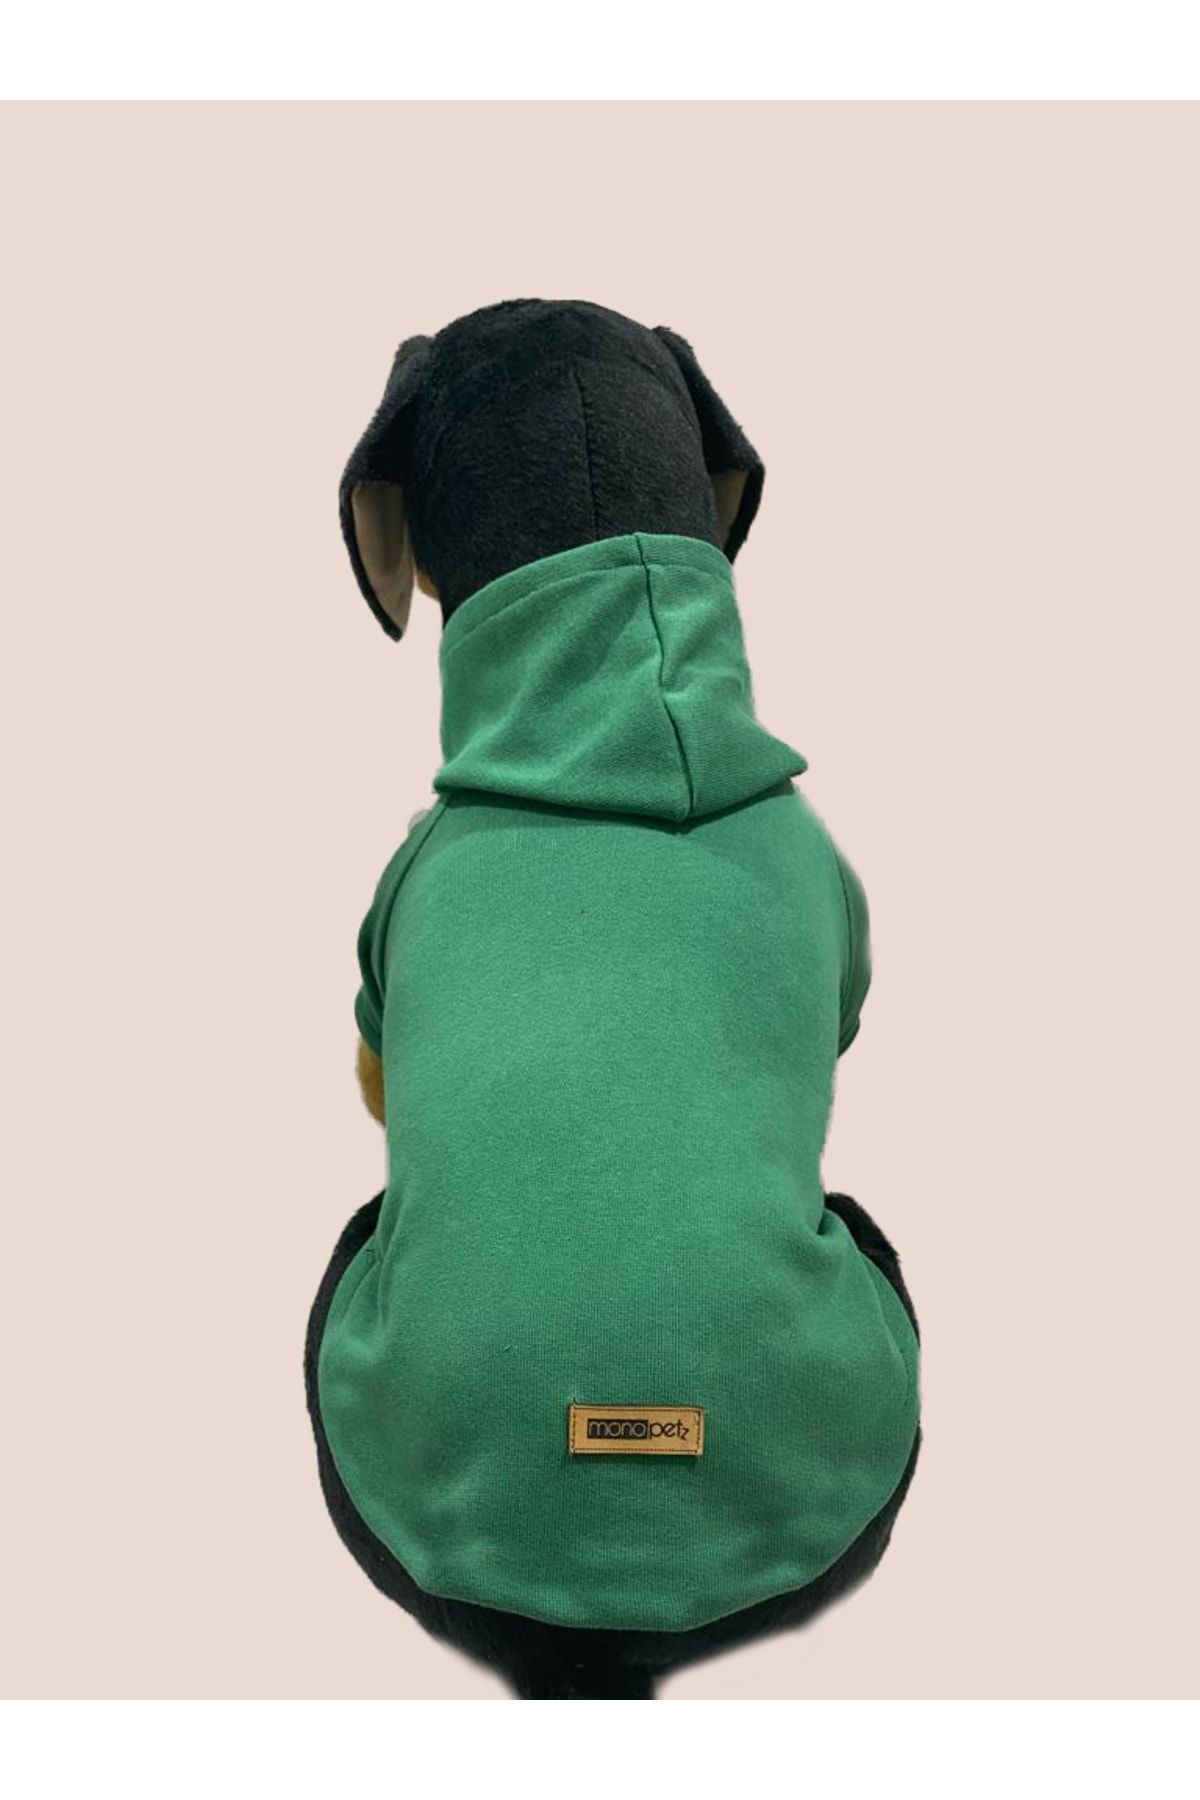 Monopetz سویشرت کلاهدار لباس سگ و گربه - سبز ساده sw green 01